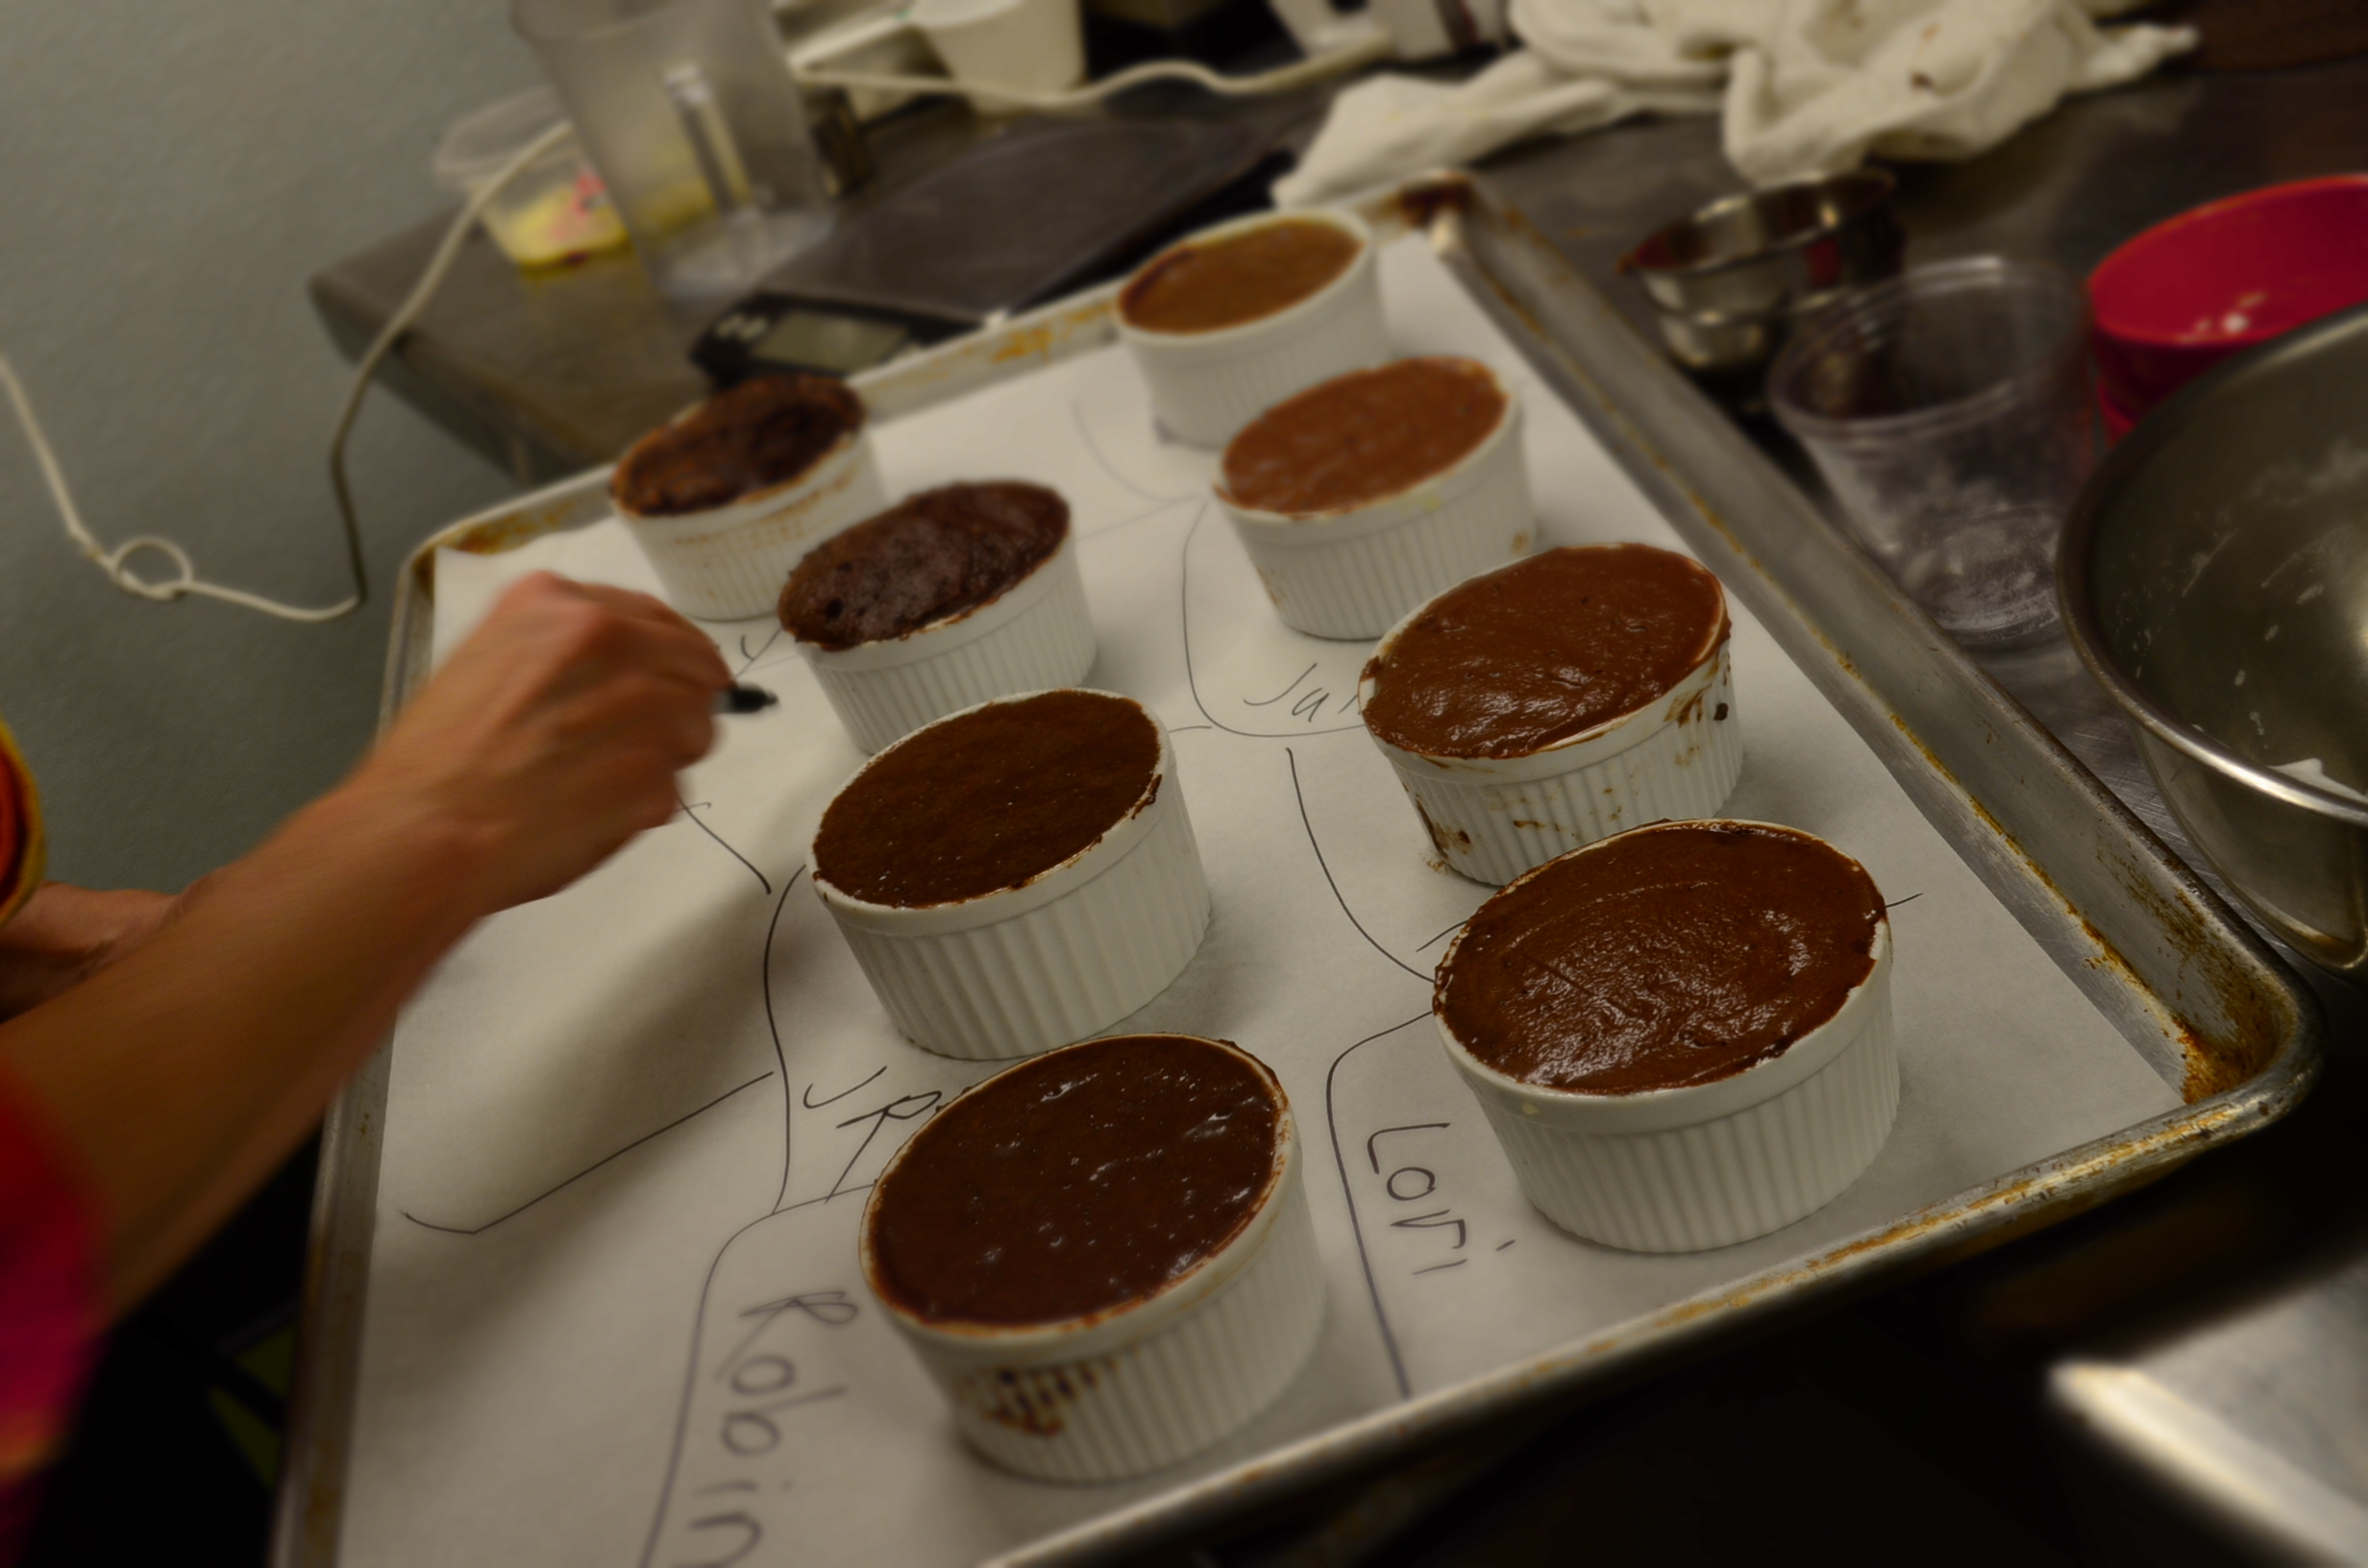 September Chocolate Baking Lab 101: Chocolate Souffle & Flourless Chocolate Cake